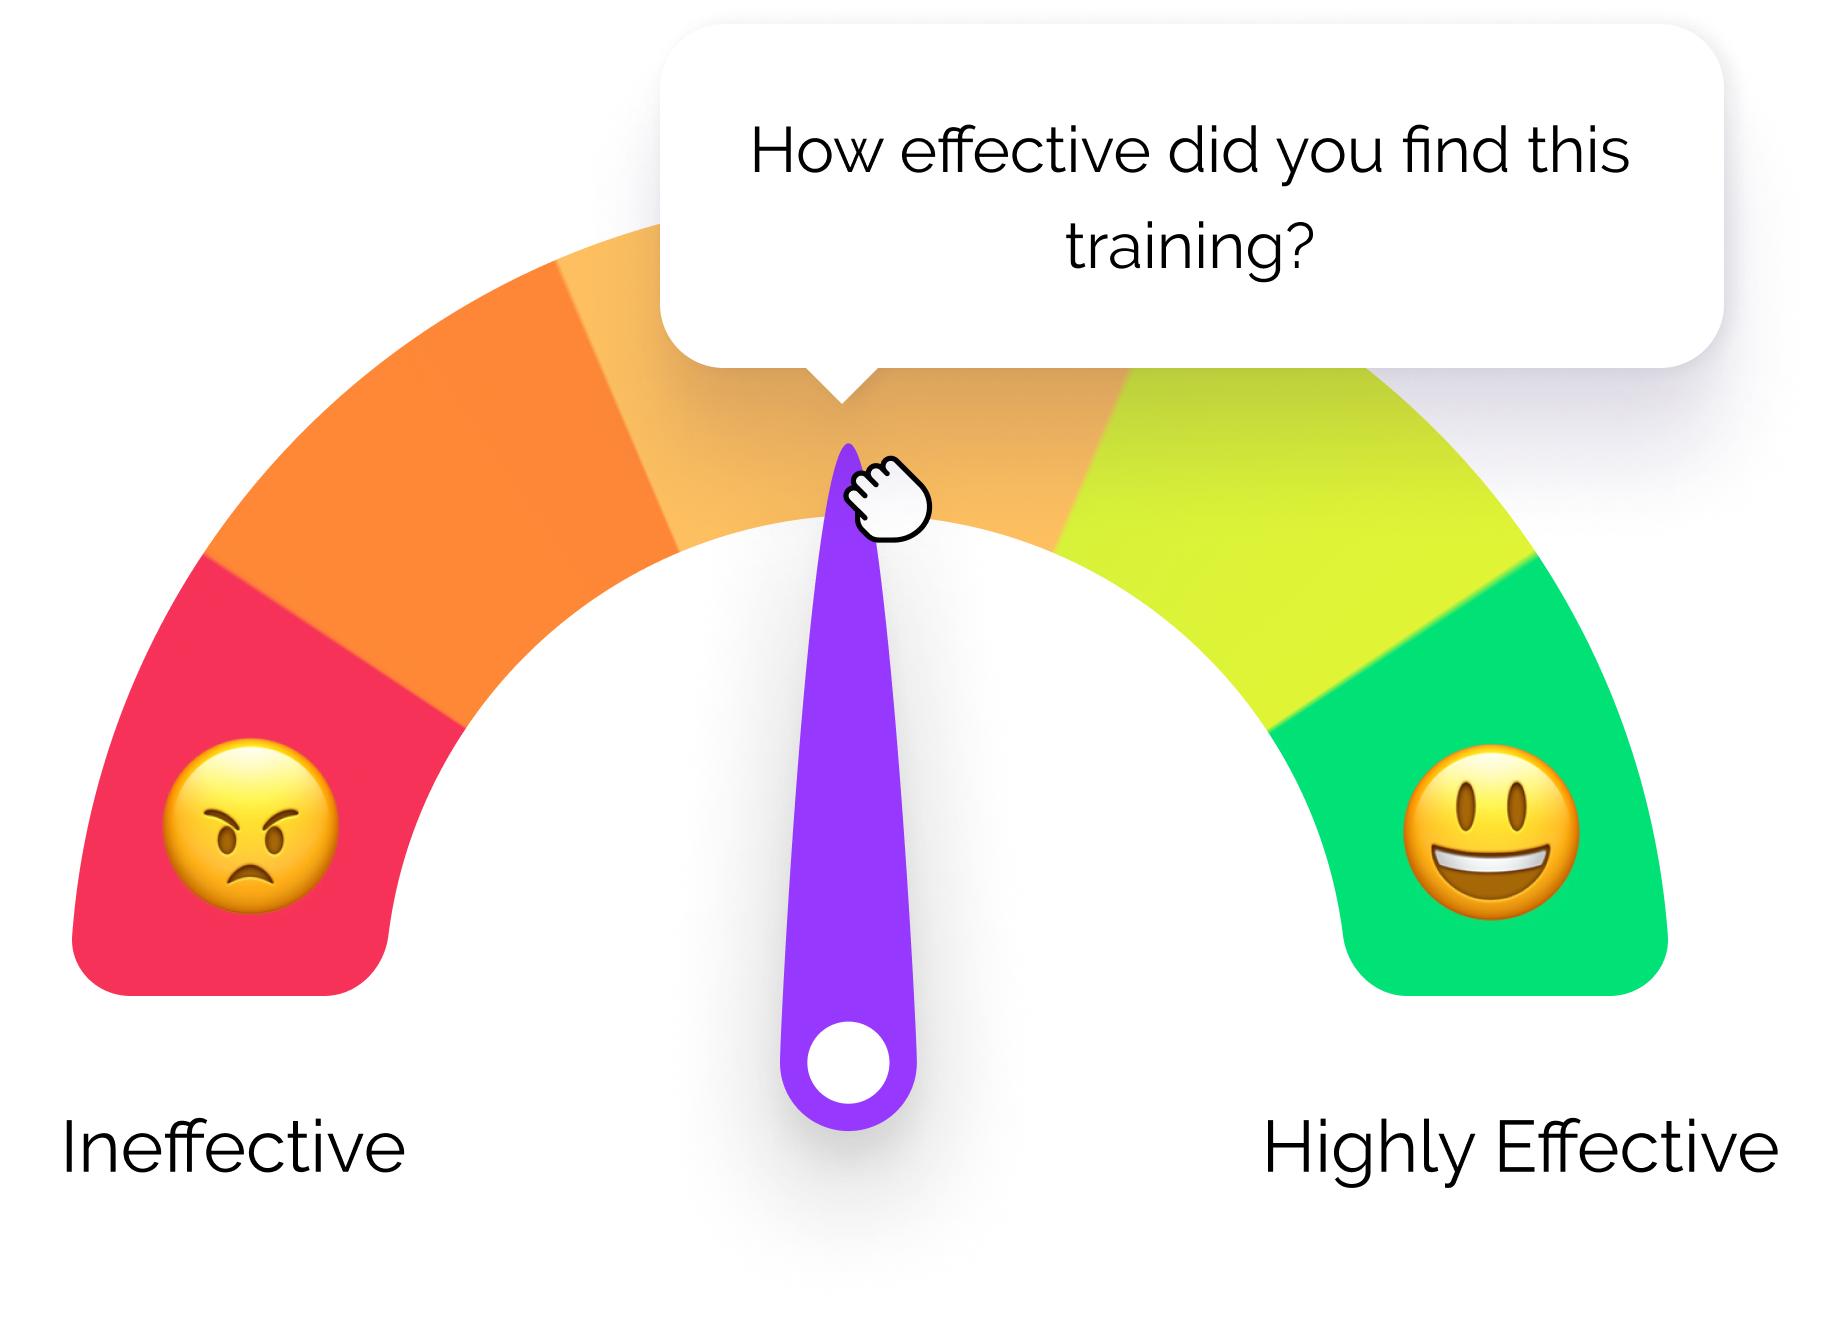 In-training employee surveys